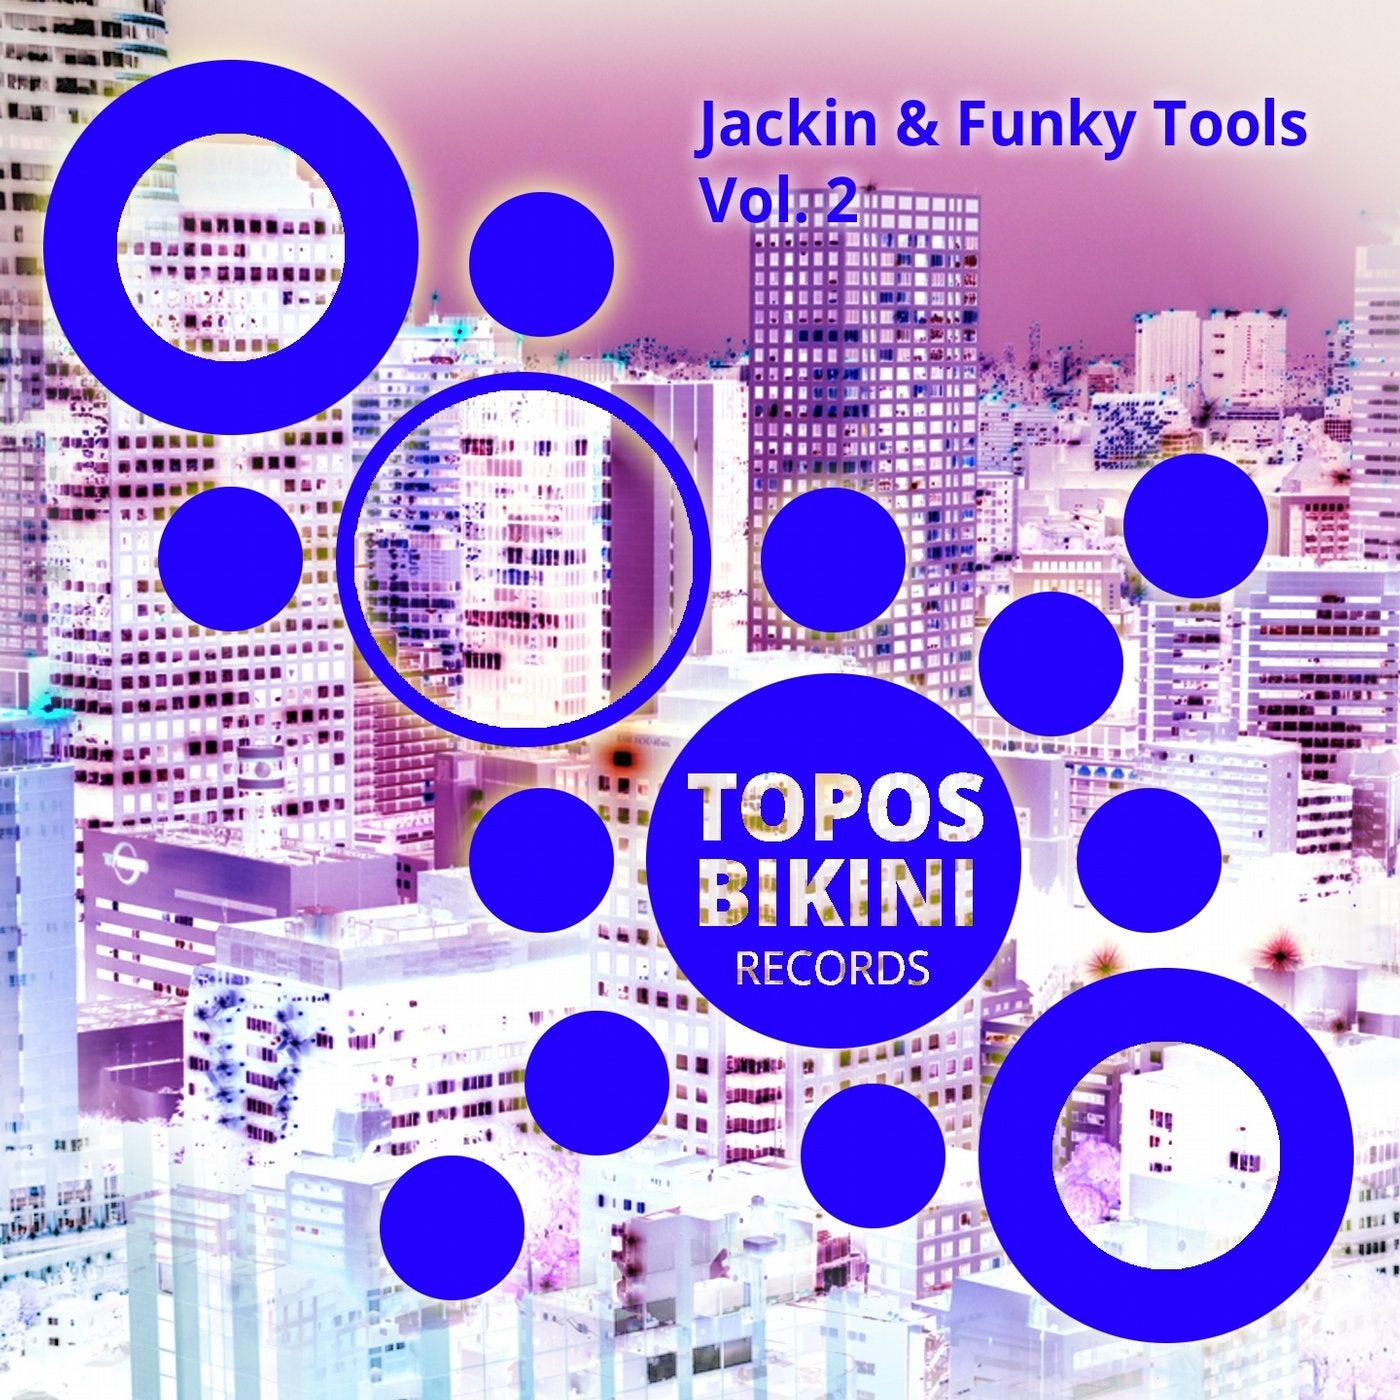 Jackin & Funky Tools, Vol. 2